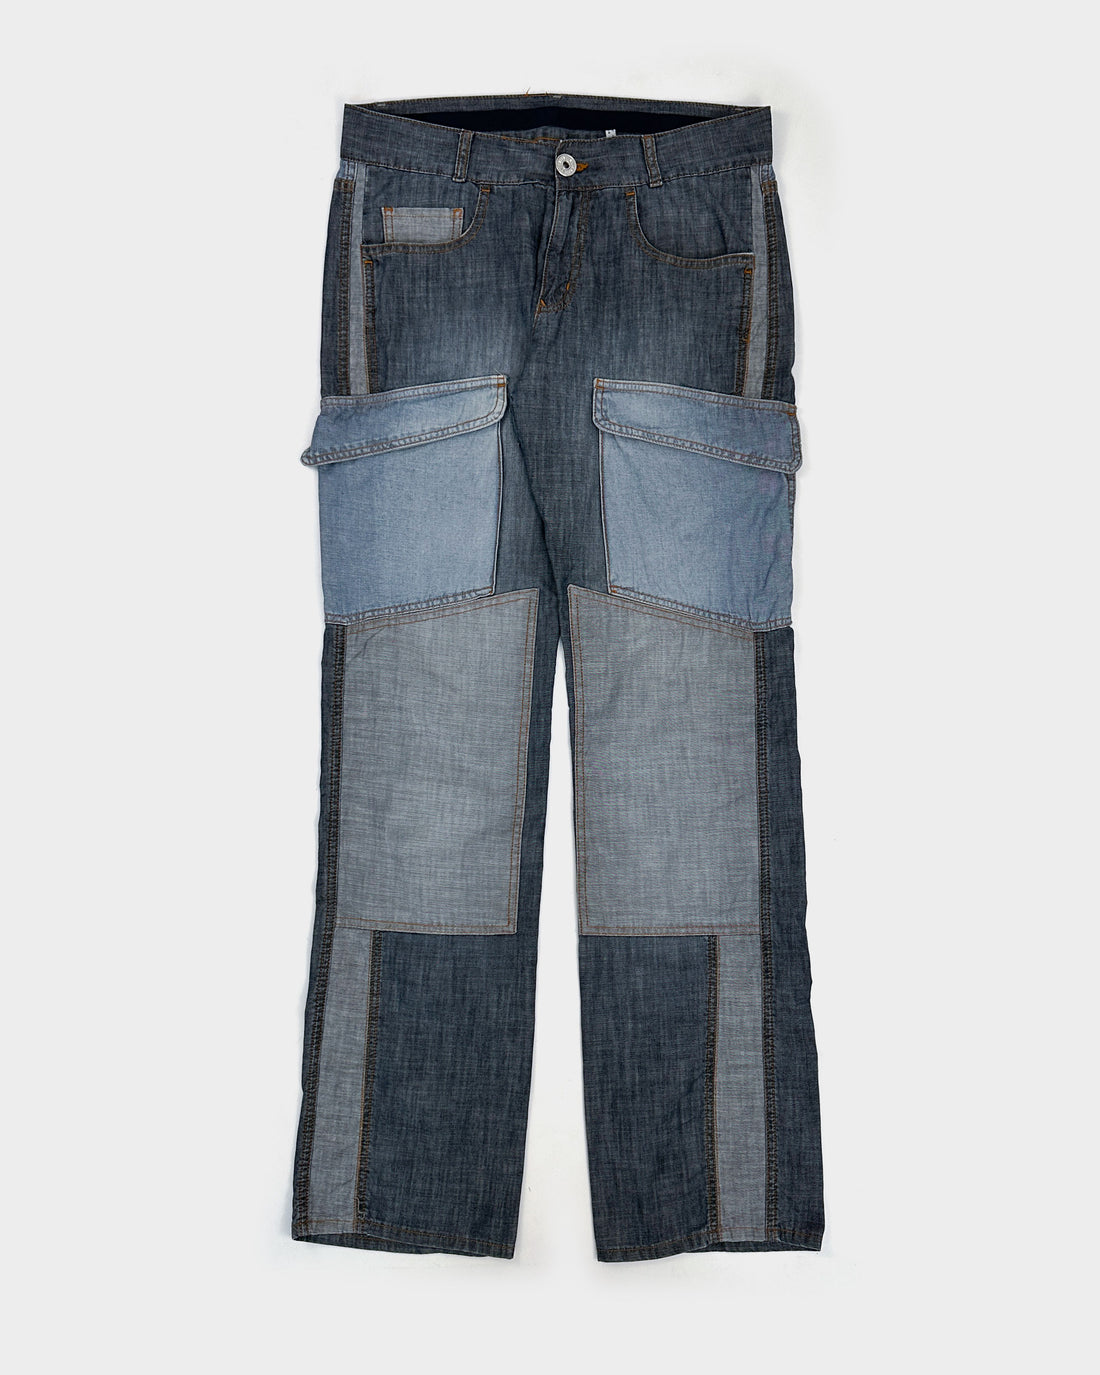 Moschino 3-Denim Deconstructed Pants 2000's